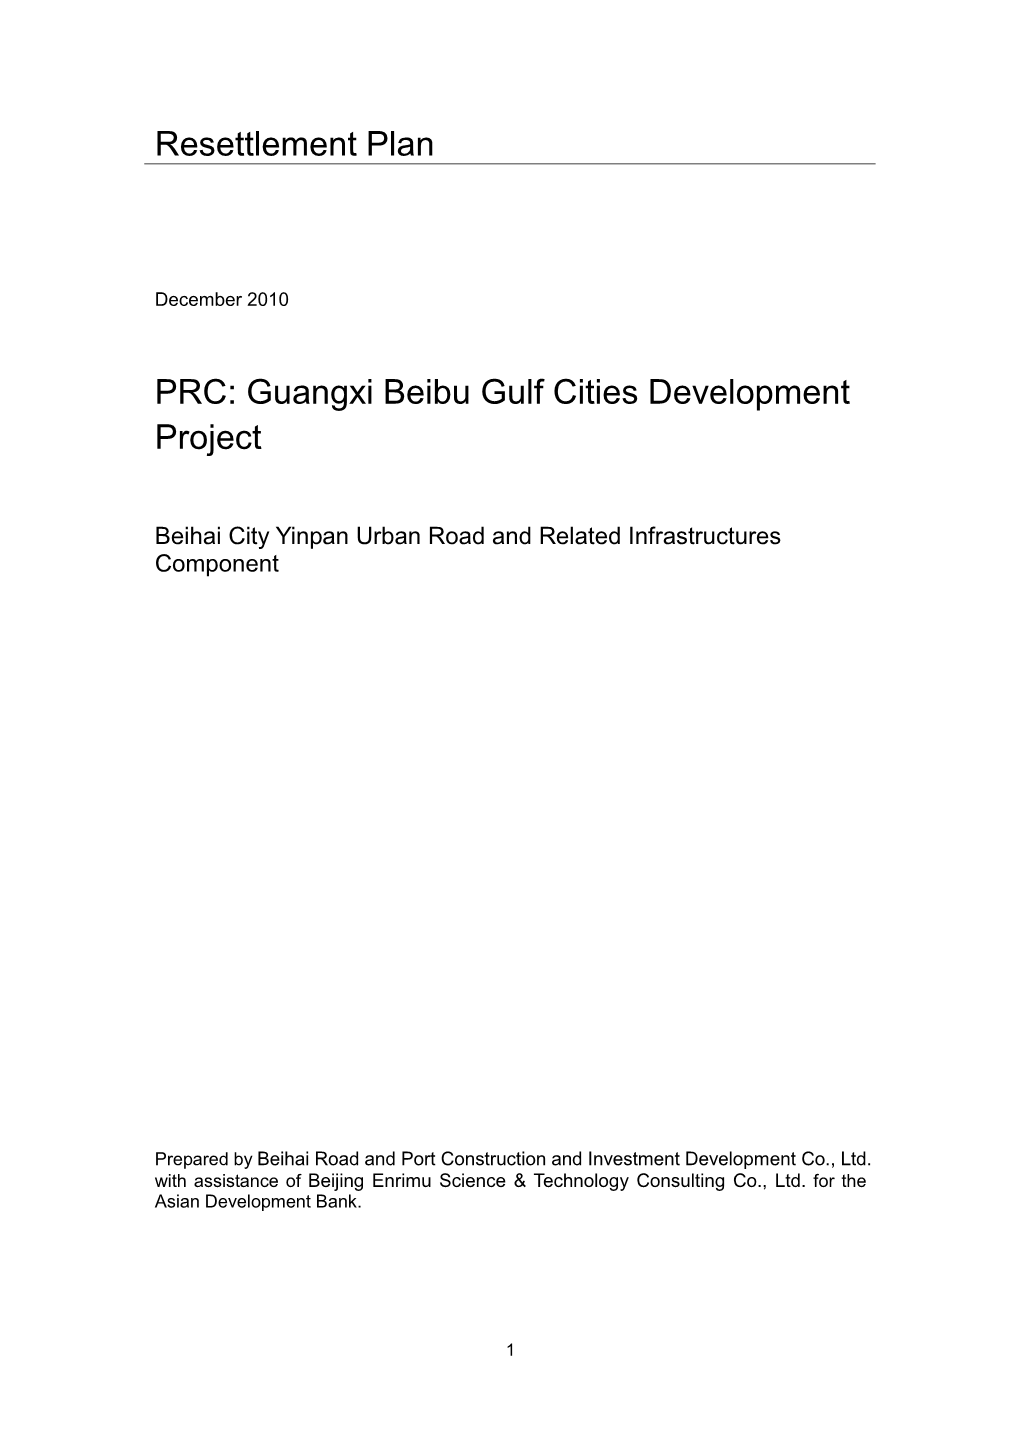 PRC: Guangxi Beibu Gulf Cities Development Project